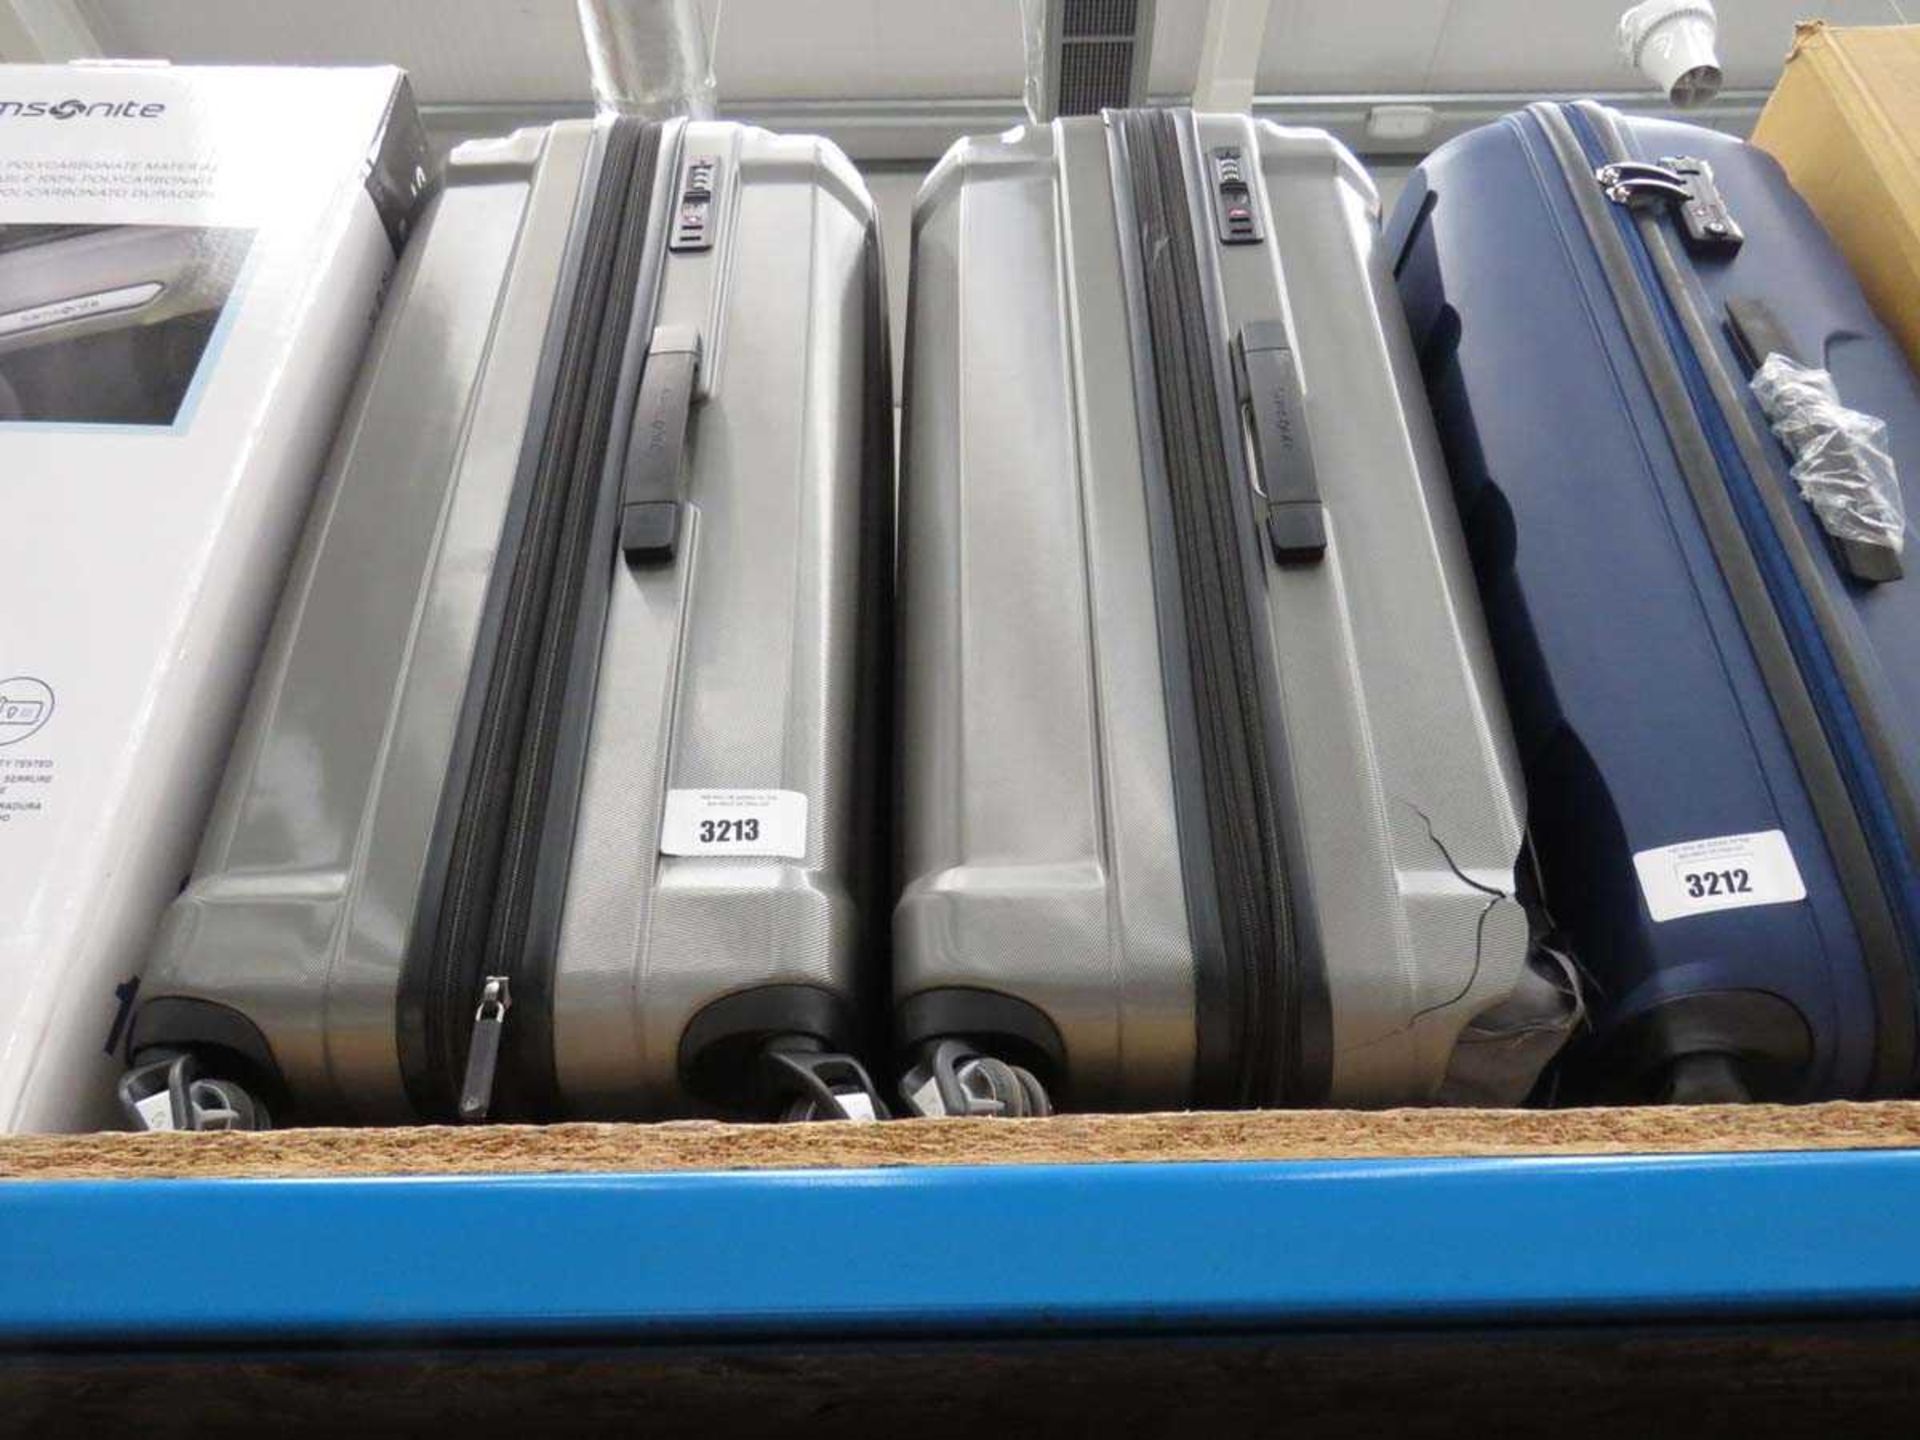 +VAT 2 large hard-shelled Samsonite suitcases